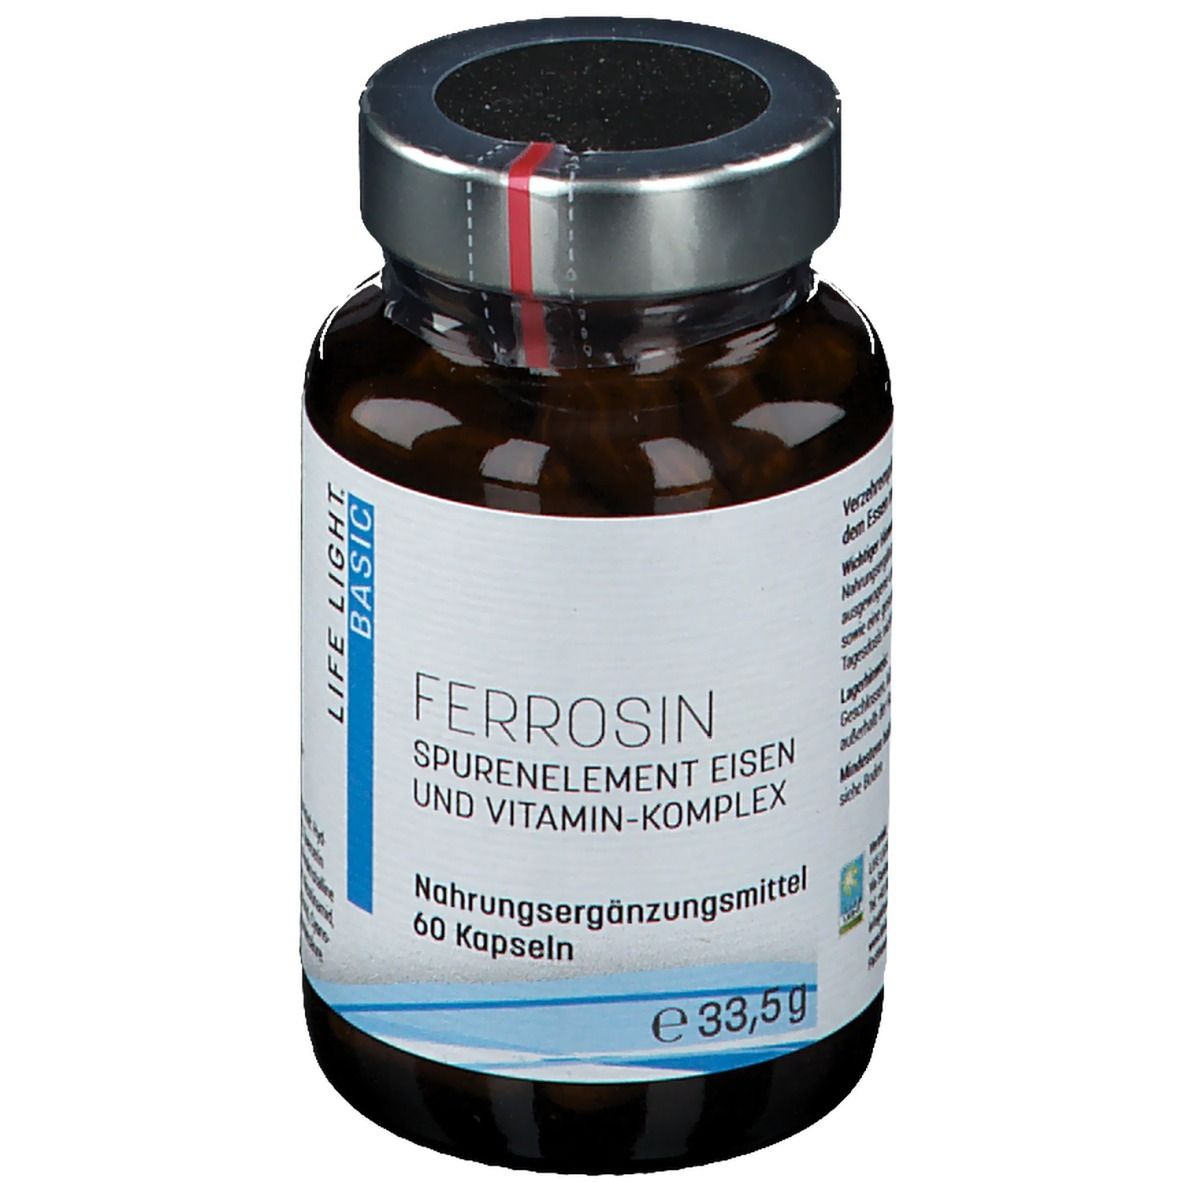 Image of LIFE LIGHT FERROSIN Eisen und Vitamin-Komplex